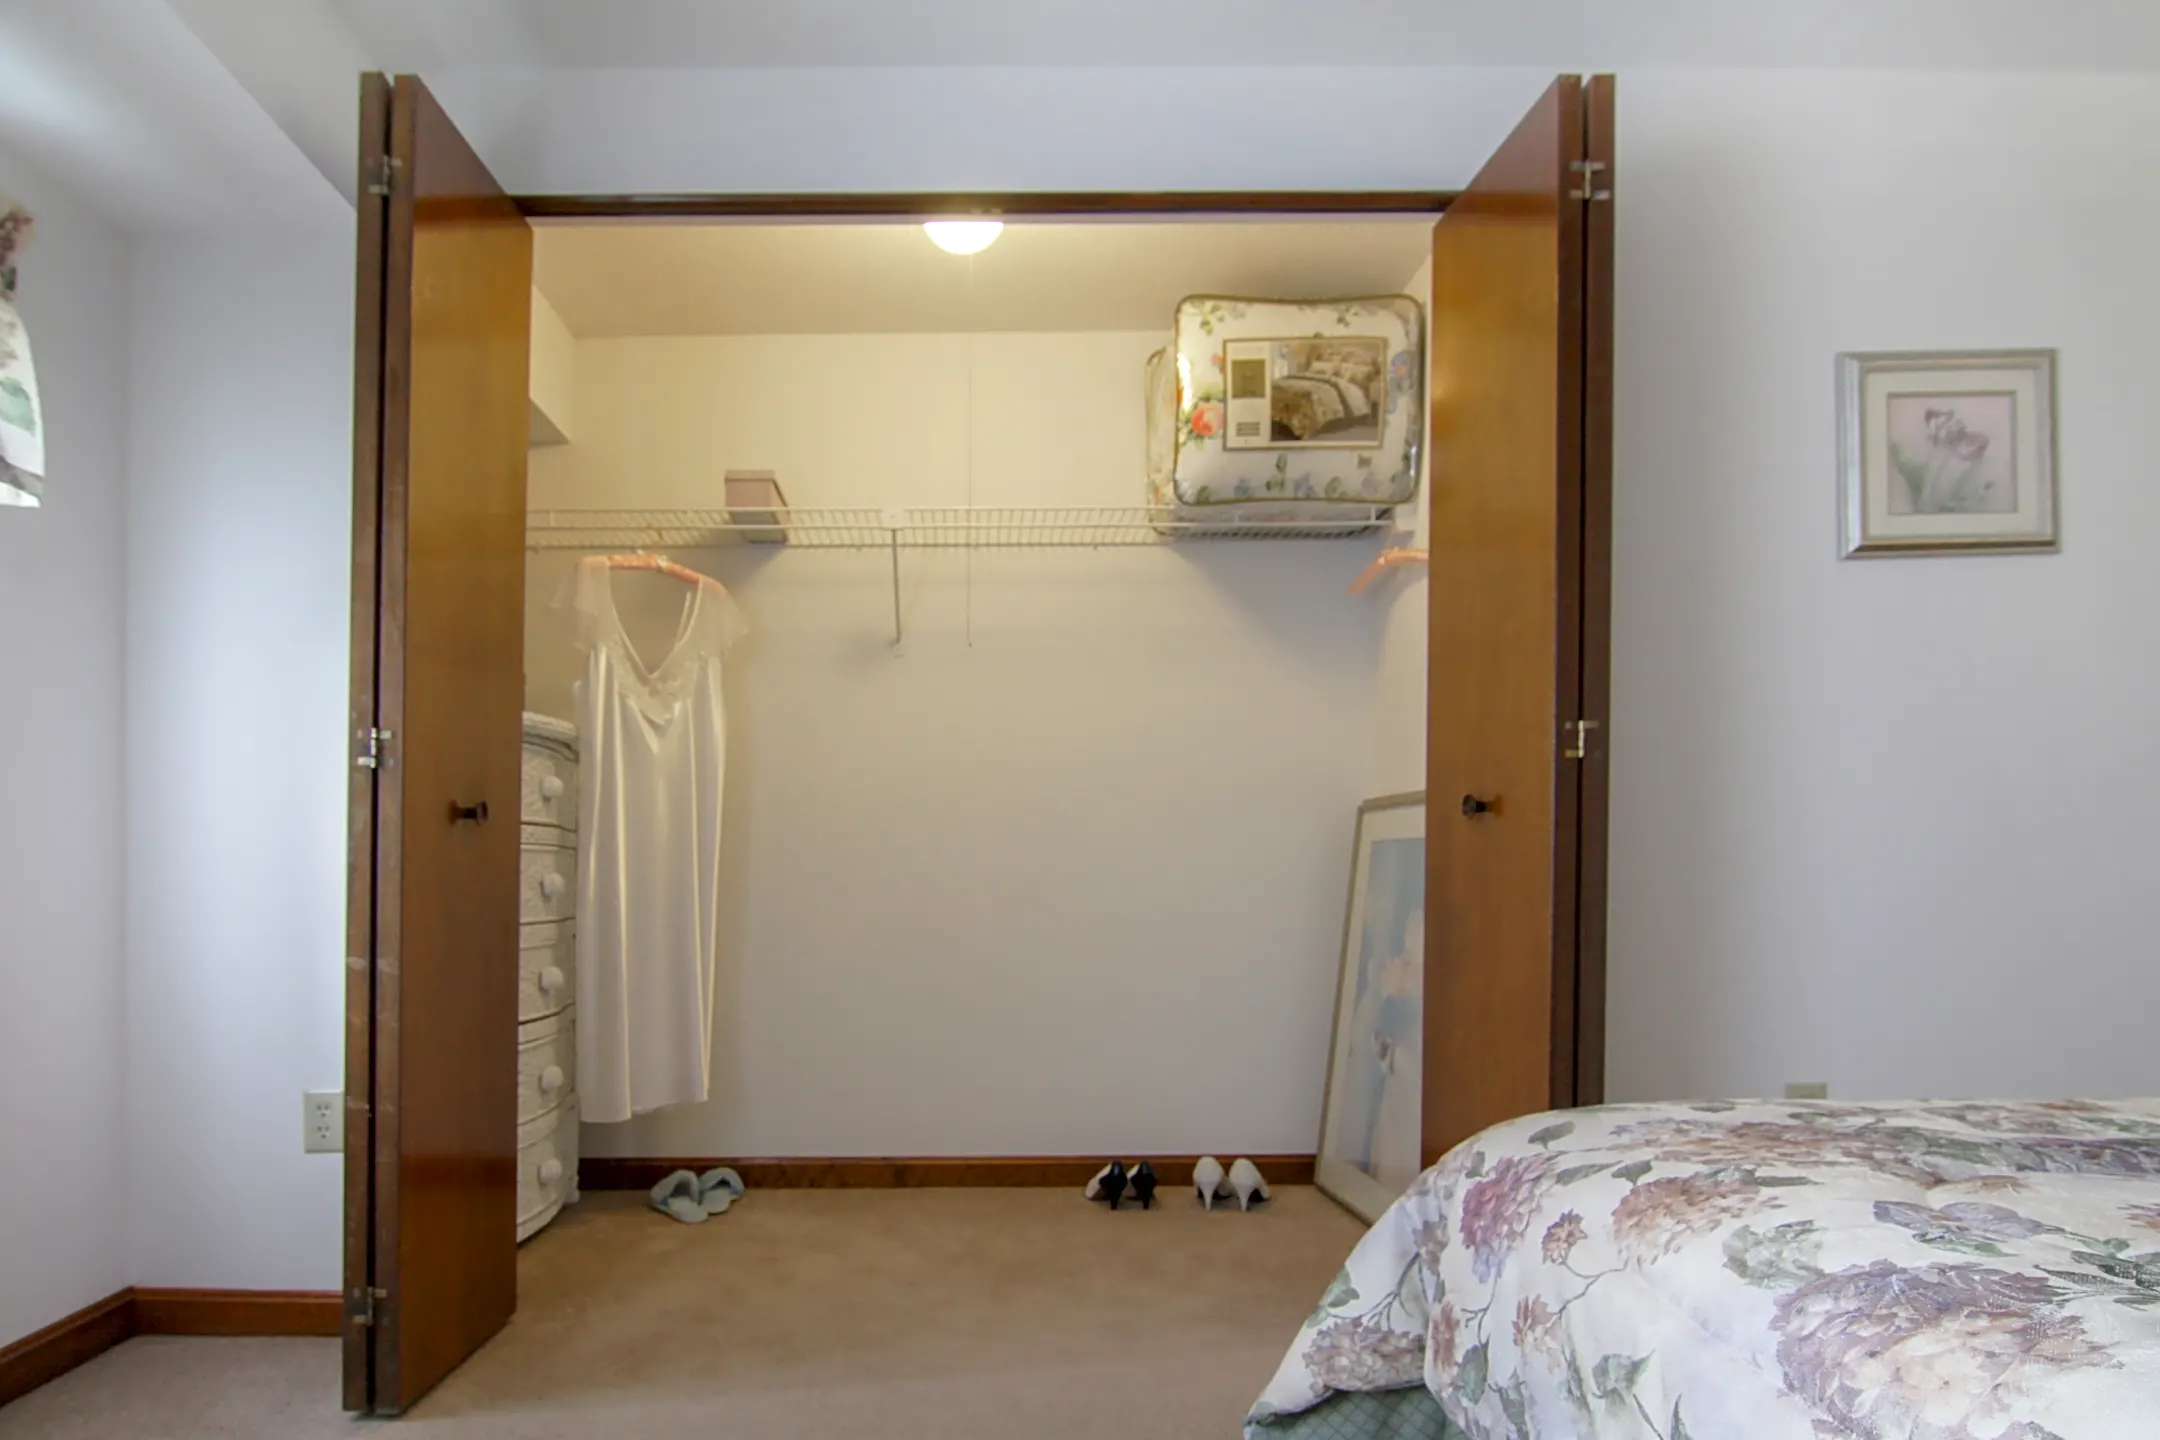 Bedroom - Cornfield Apartments - Ellington, CT